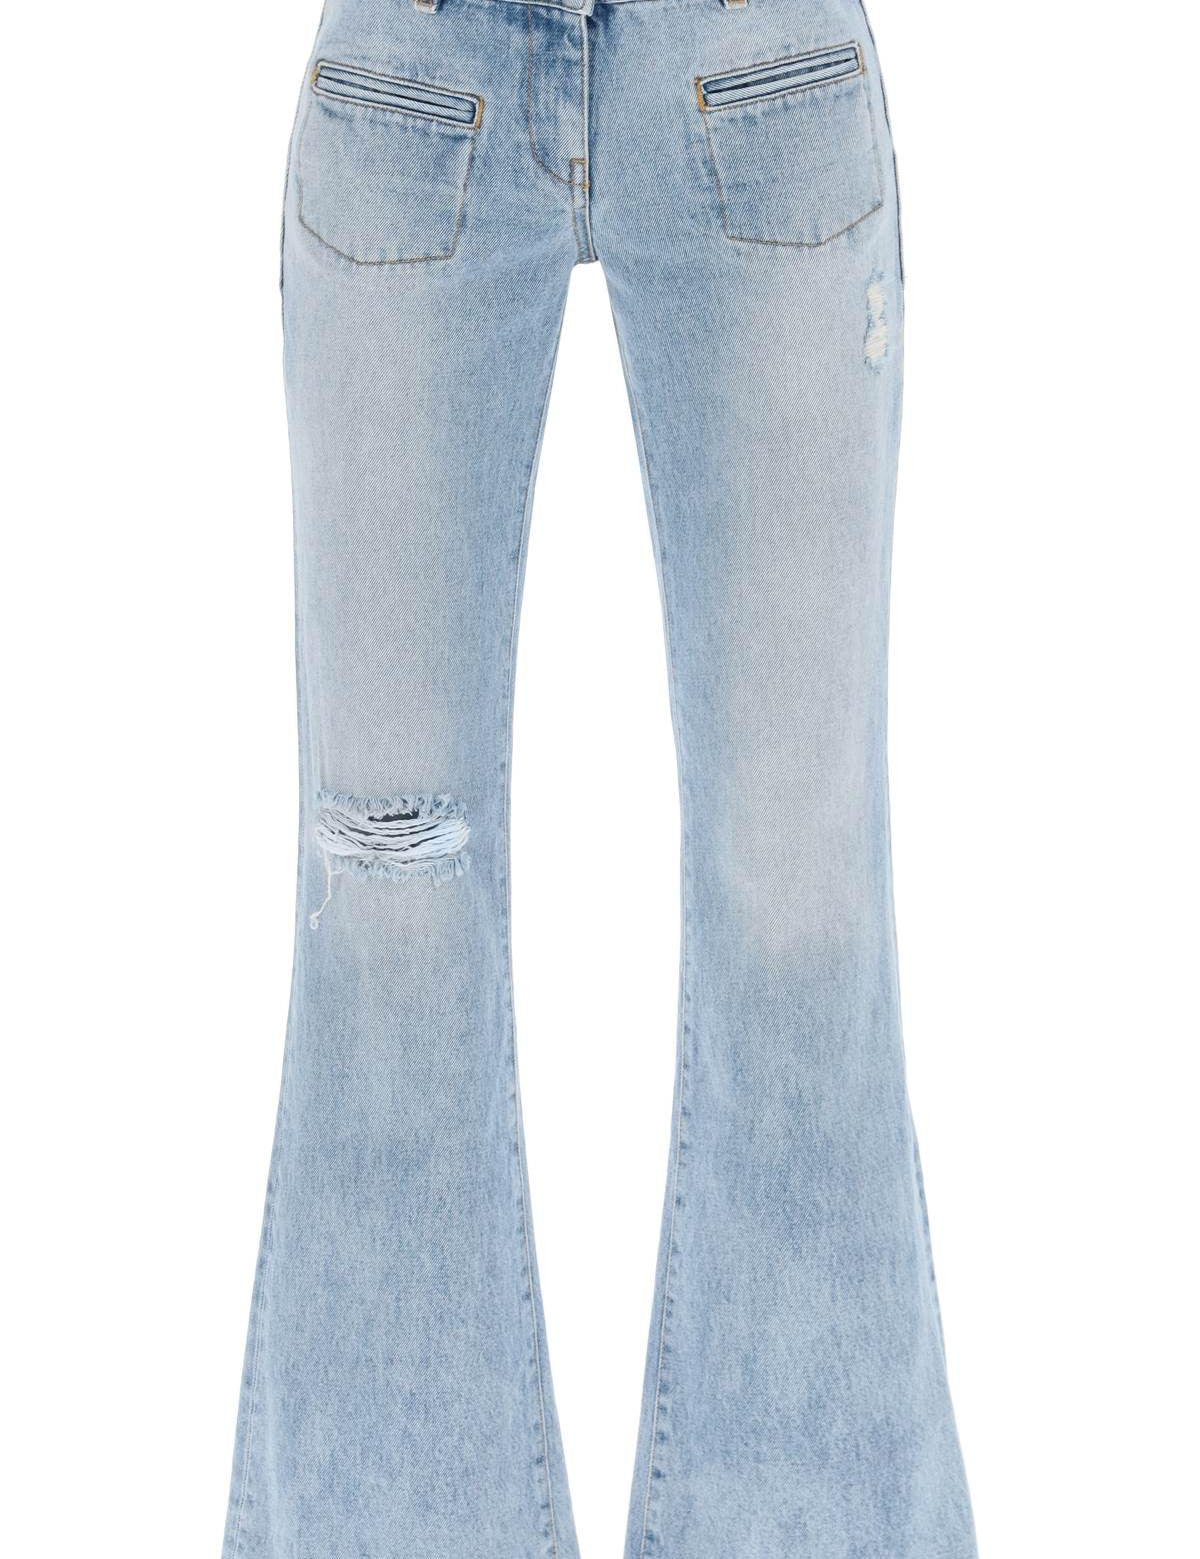 palm-angels-low-rise-waist-bootcut-jeans.jpg